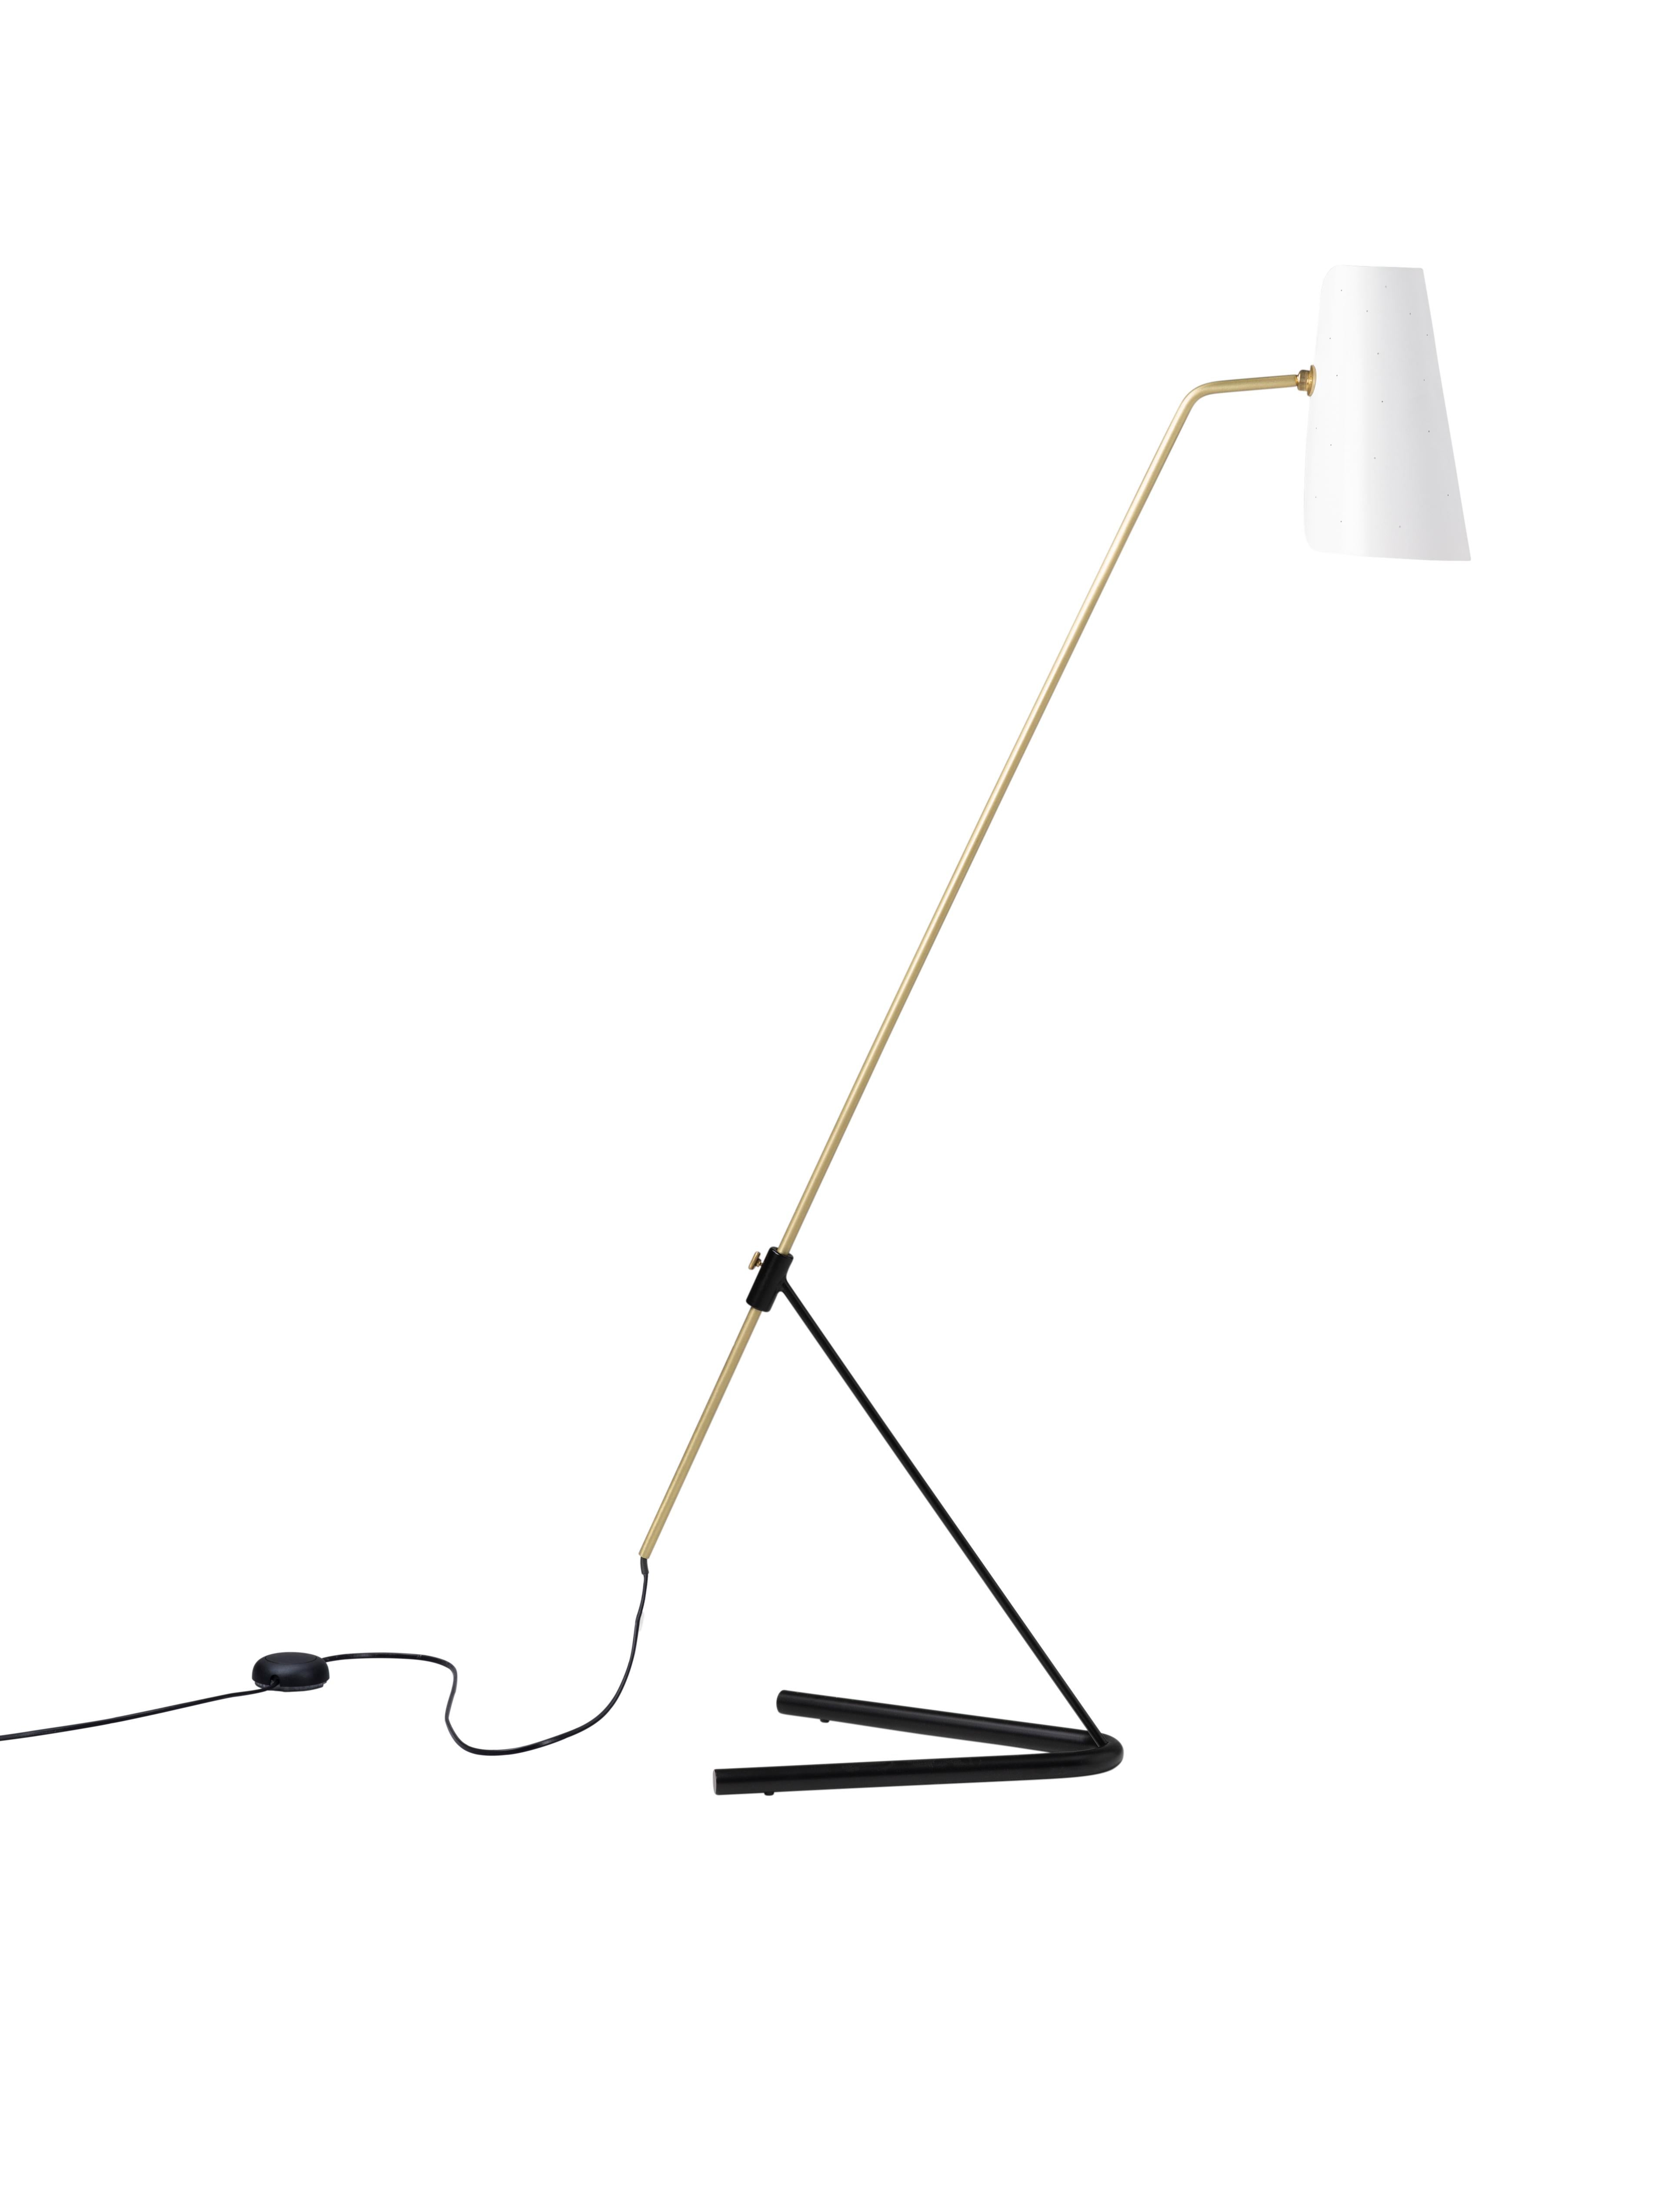 Contemporary Pierre Guariche 'G21' Adjustable Floor Lamp for Sammode Studio in White For Sale